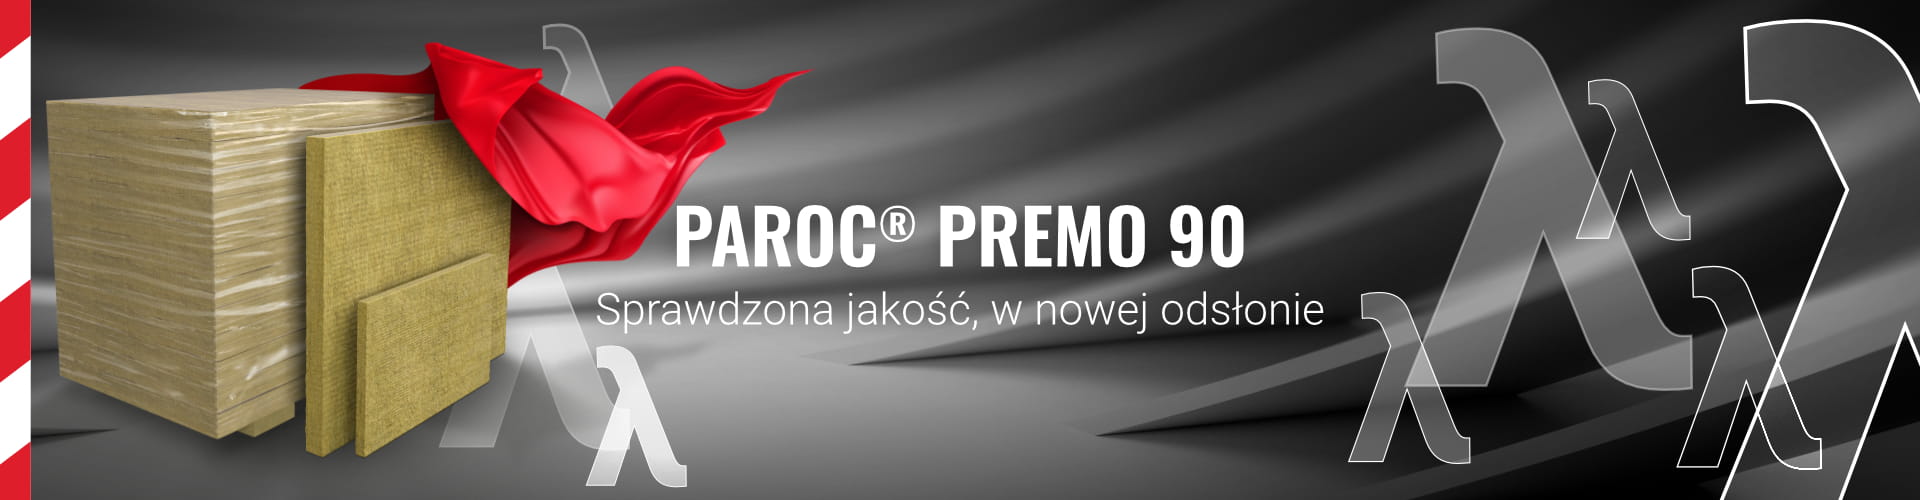 PAROC PREMO lambda 1920x500_reveal PL